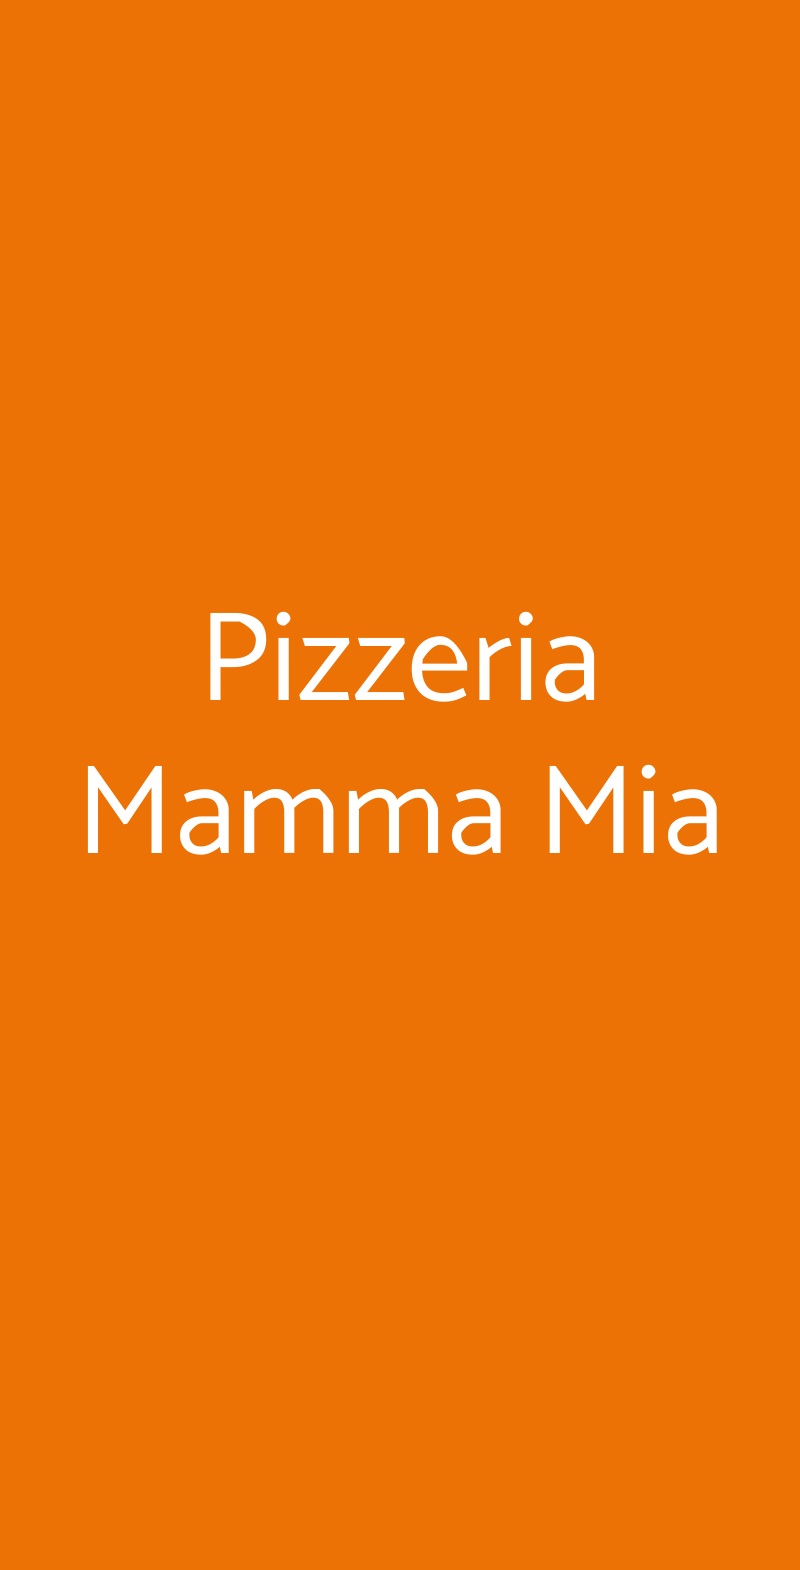 Pizzeria Mamma Mia Trento menù 1 pagina